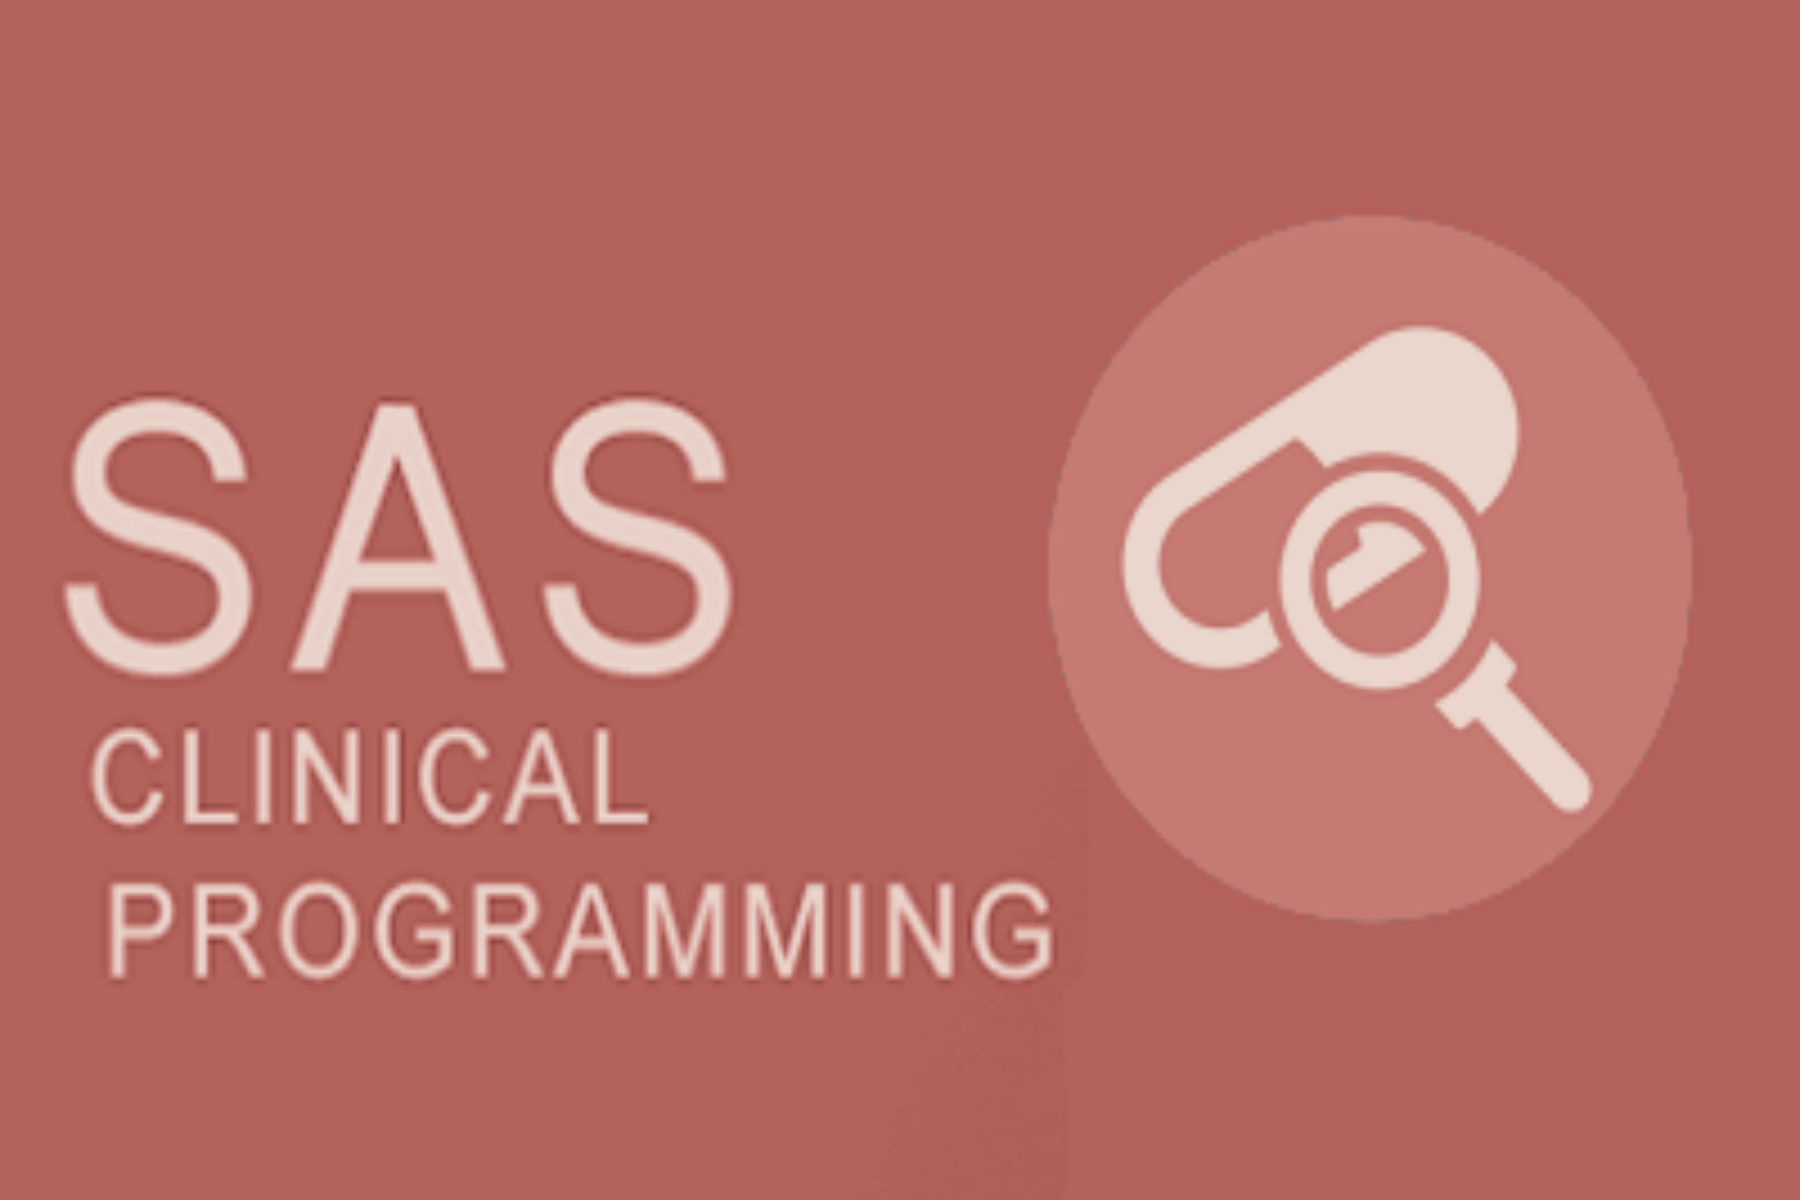 SAS Clinical Programming Training in chennai